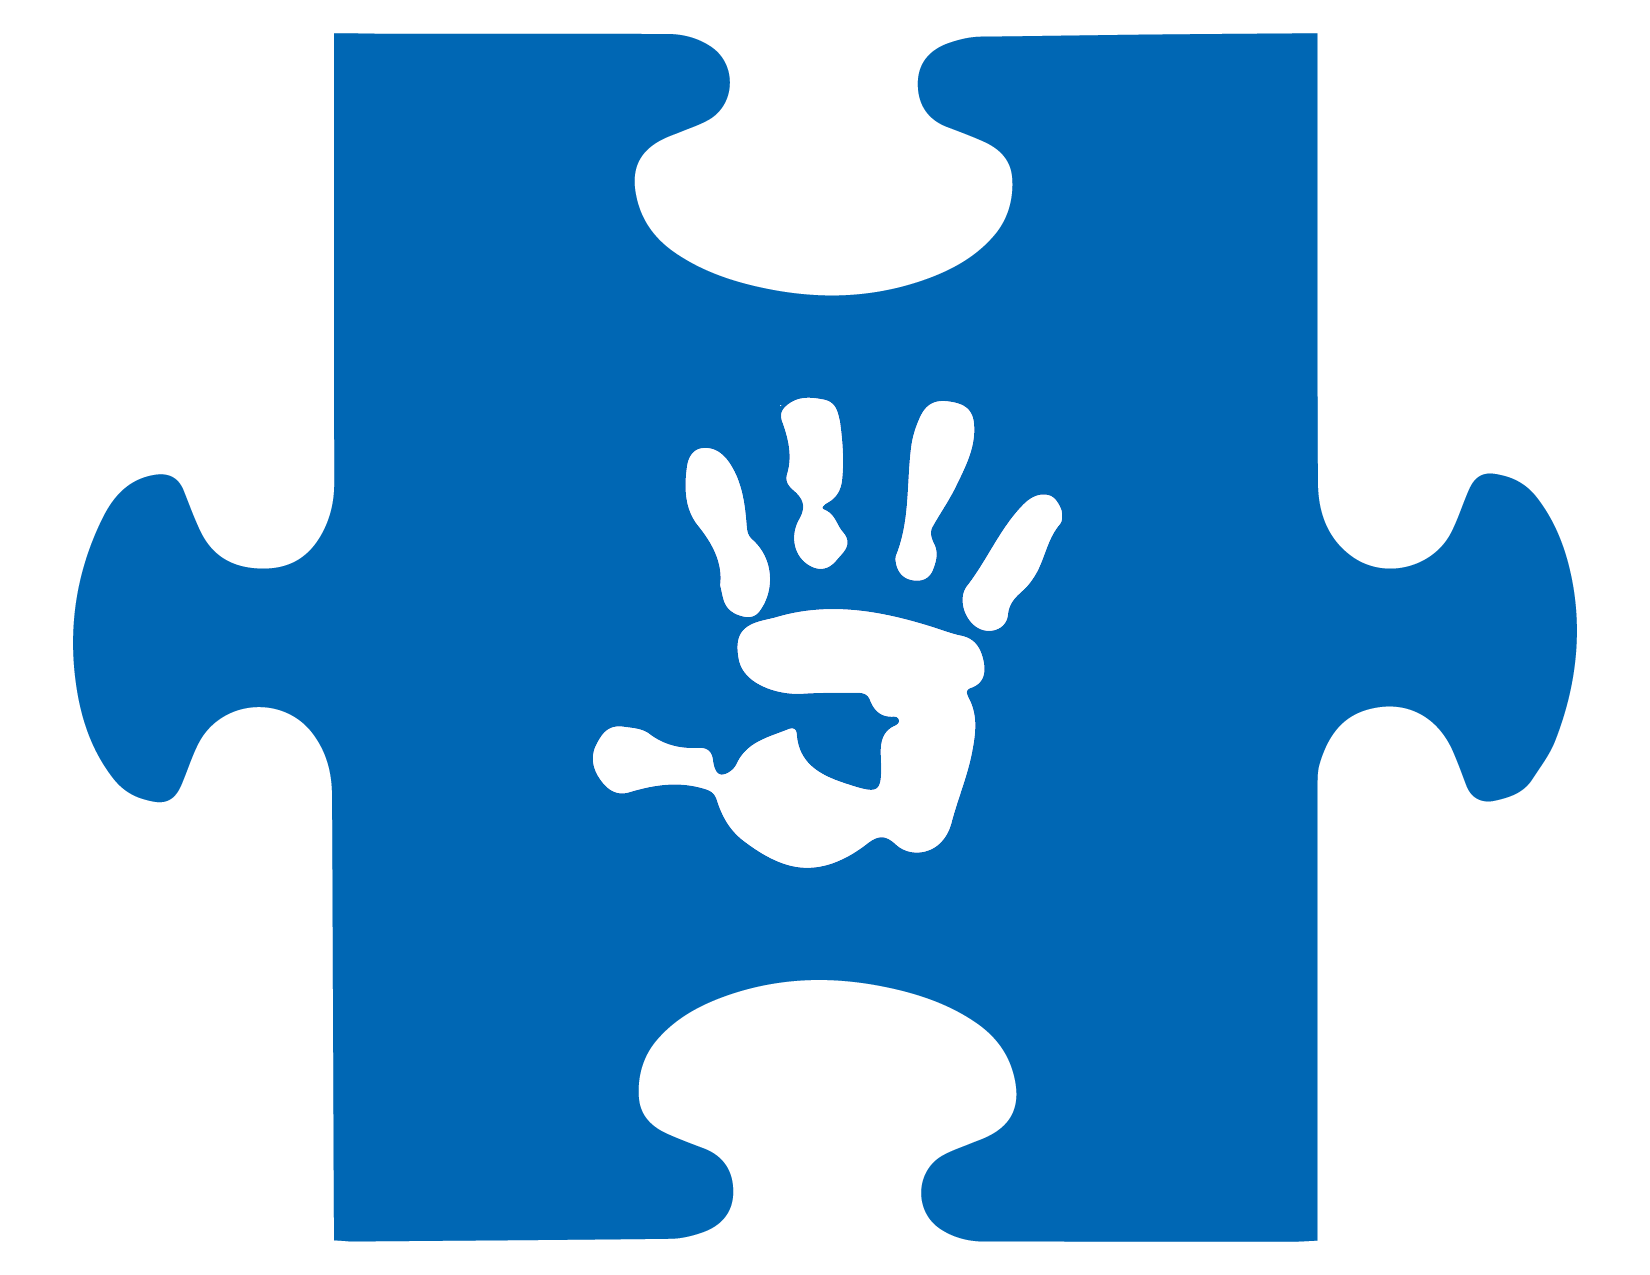 Hands Center for Autism's Mission